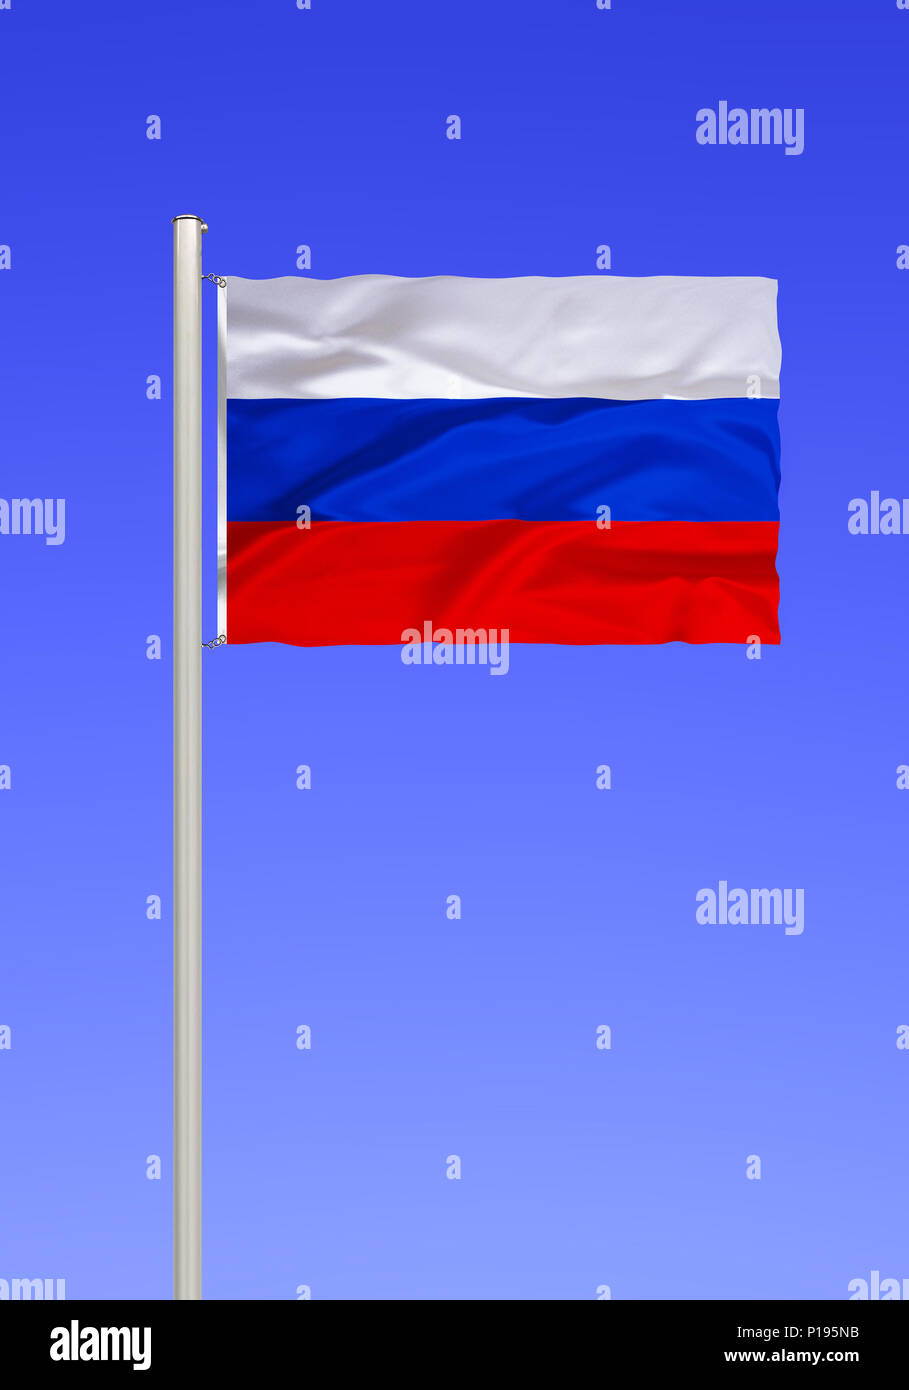 https://c8.alamy.com/comp/P195NB/flag-of-russia-flagge-von-russland-P195NB.jpg